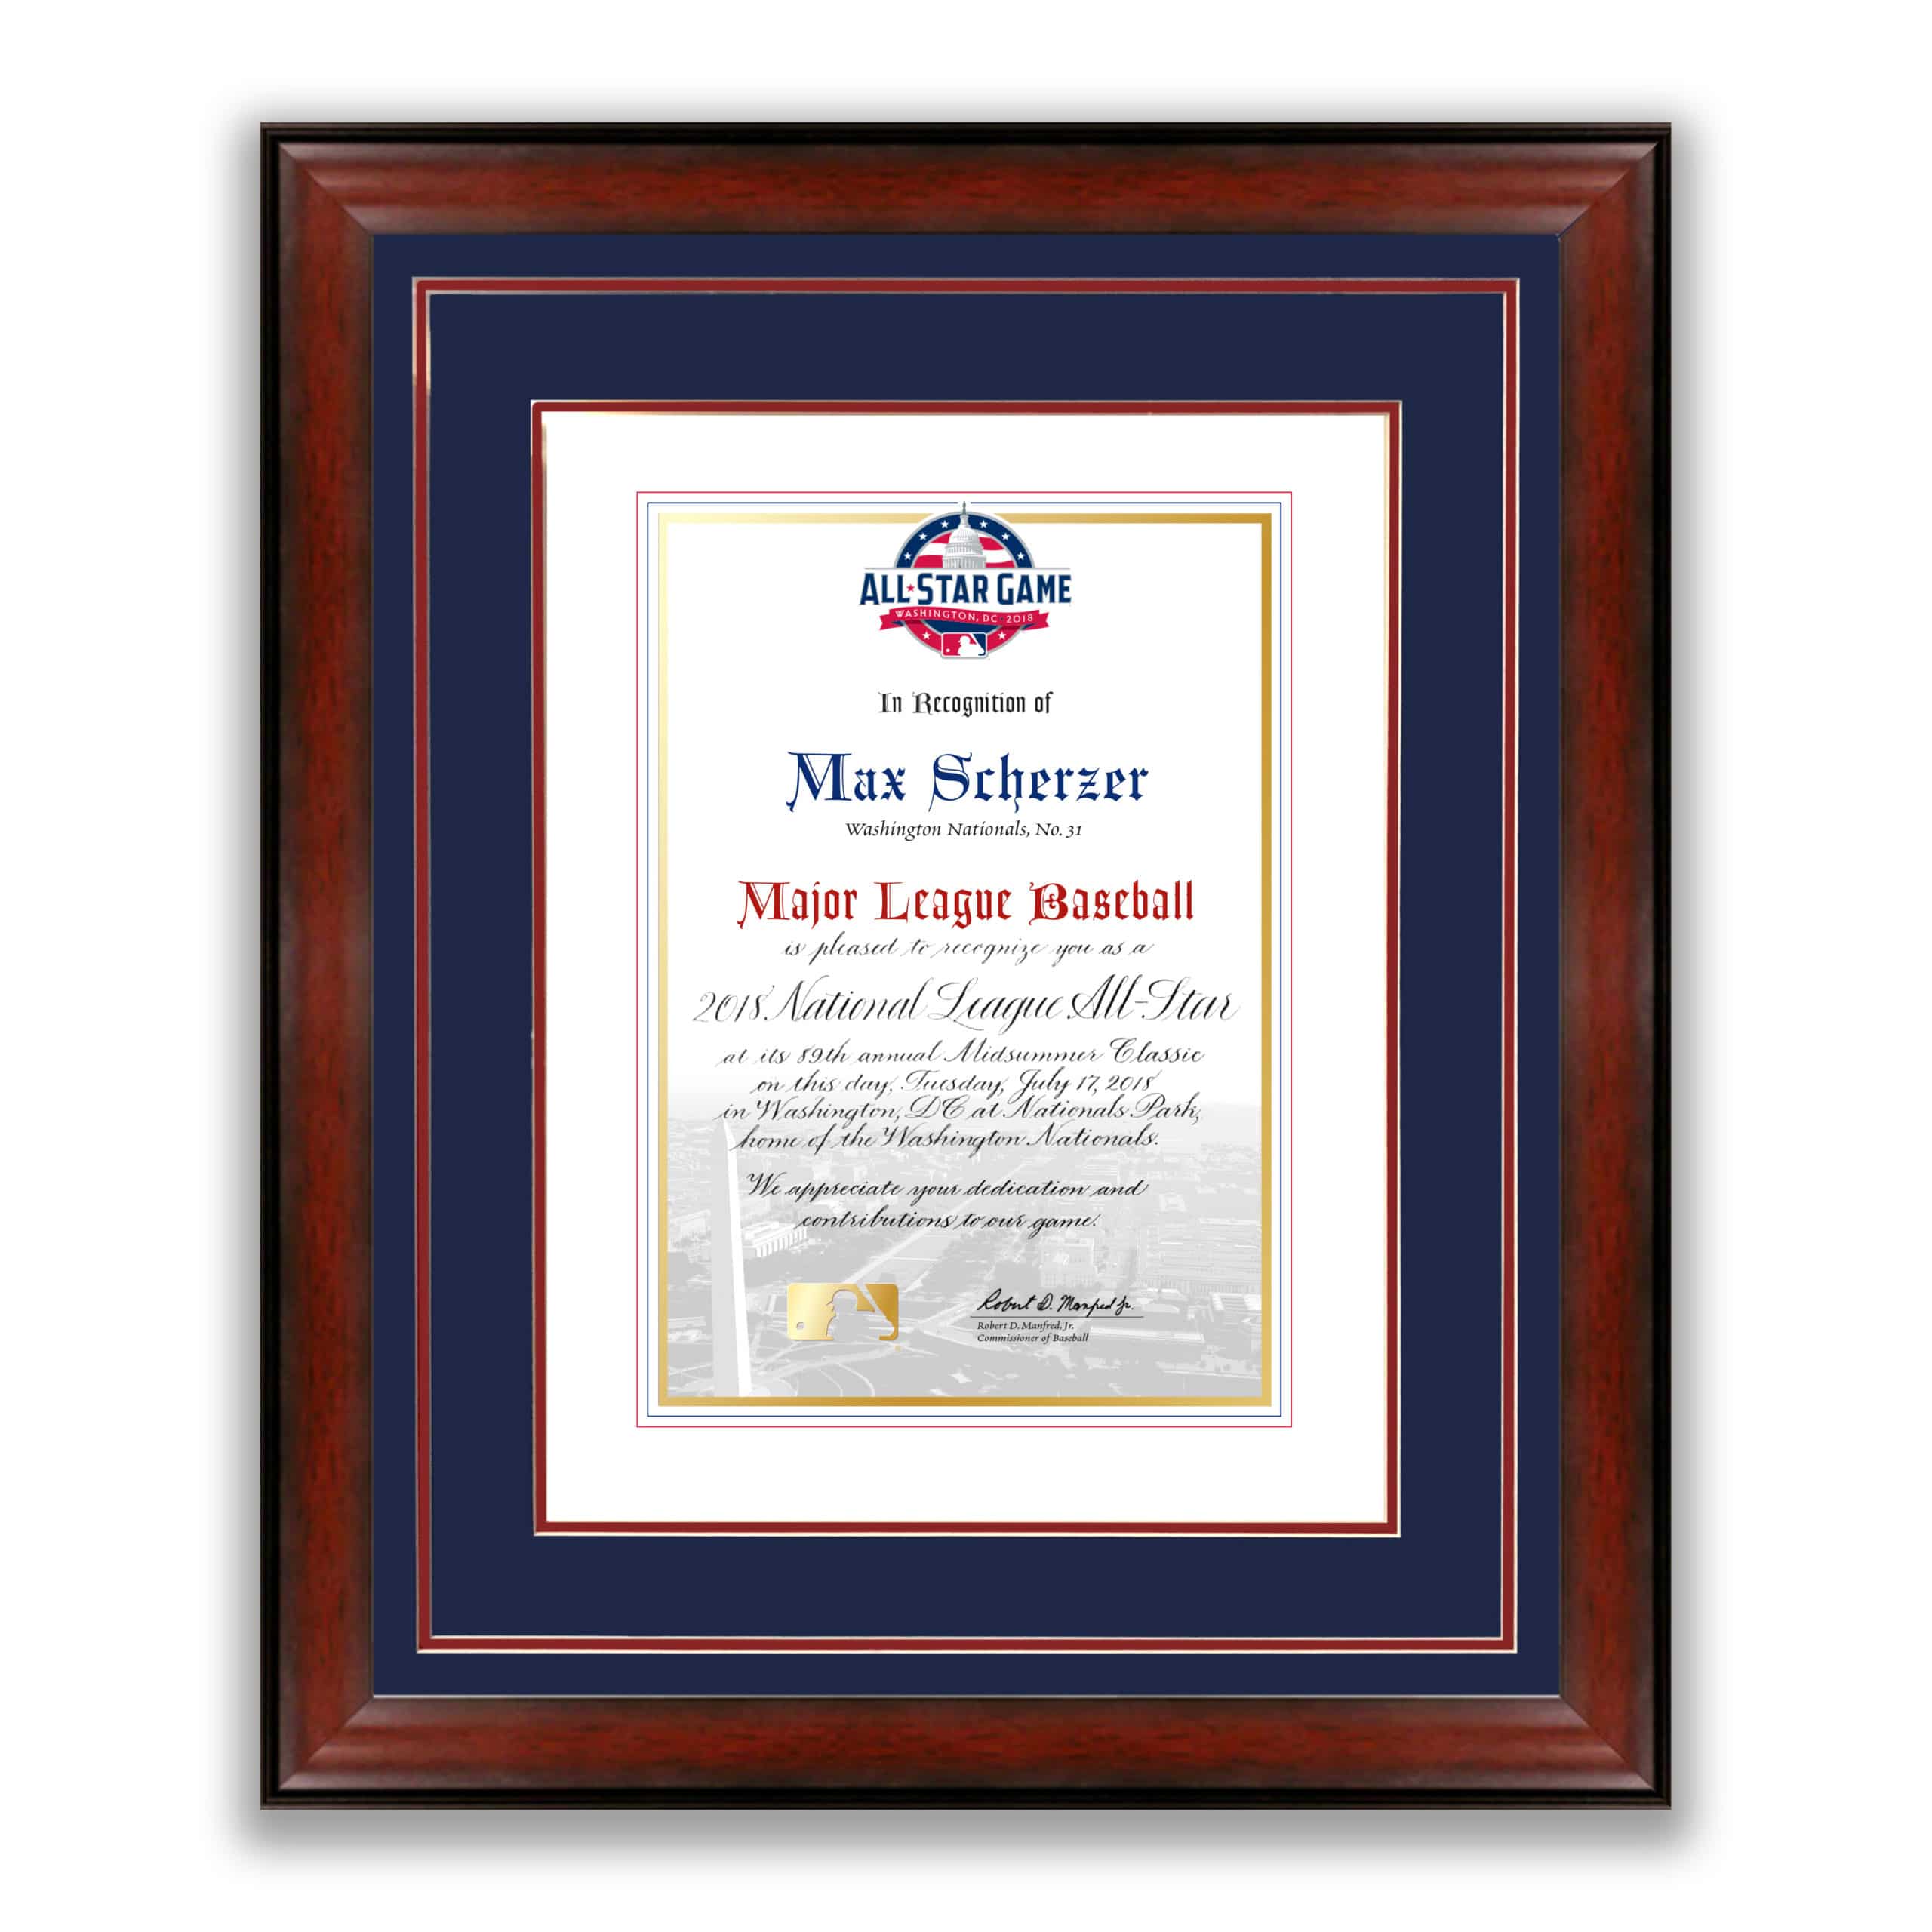 Major League Baseball All Star Game Certificate